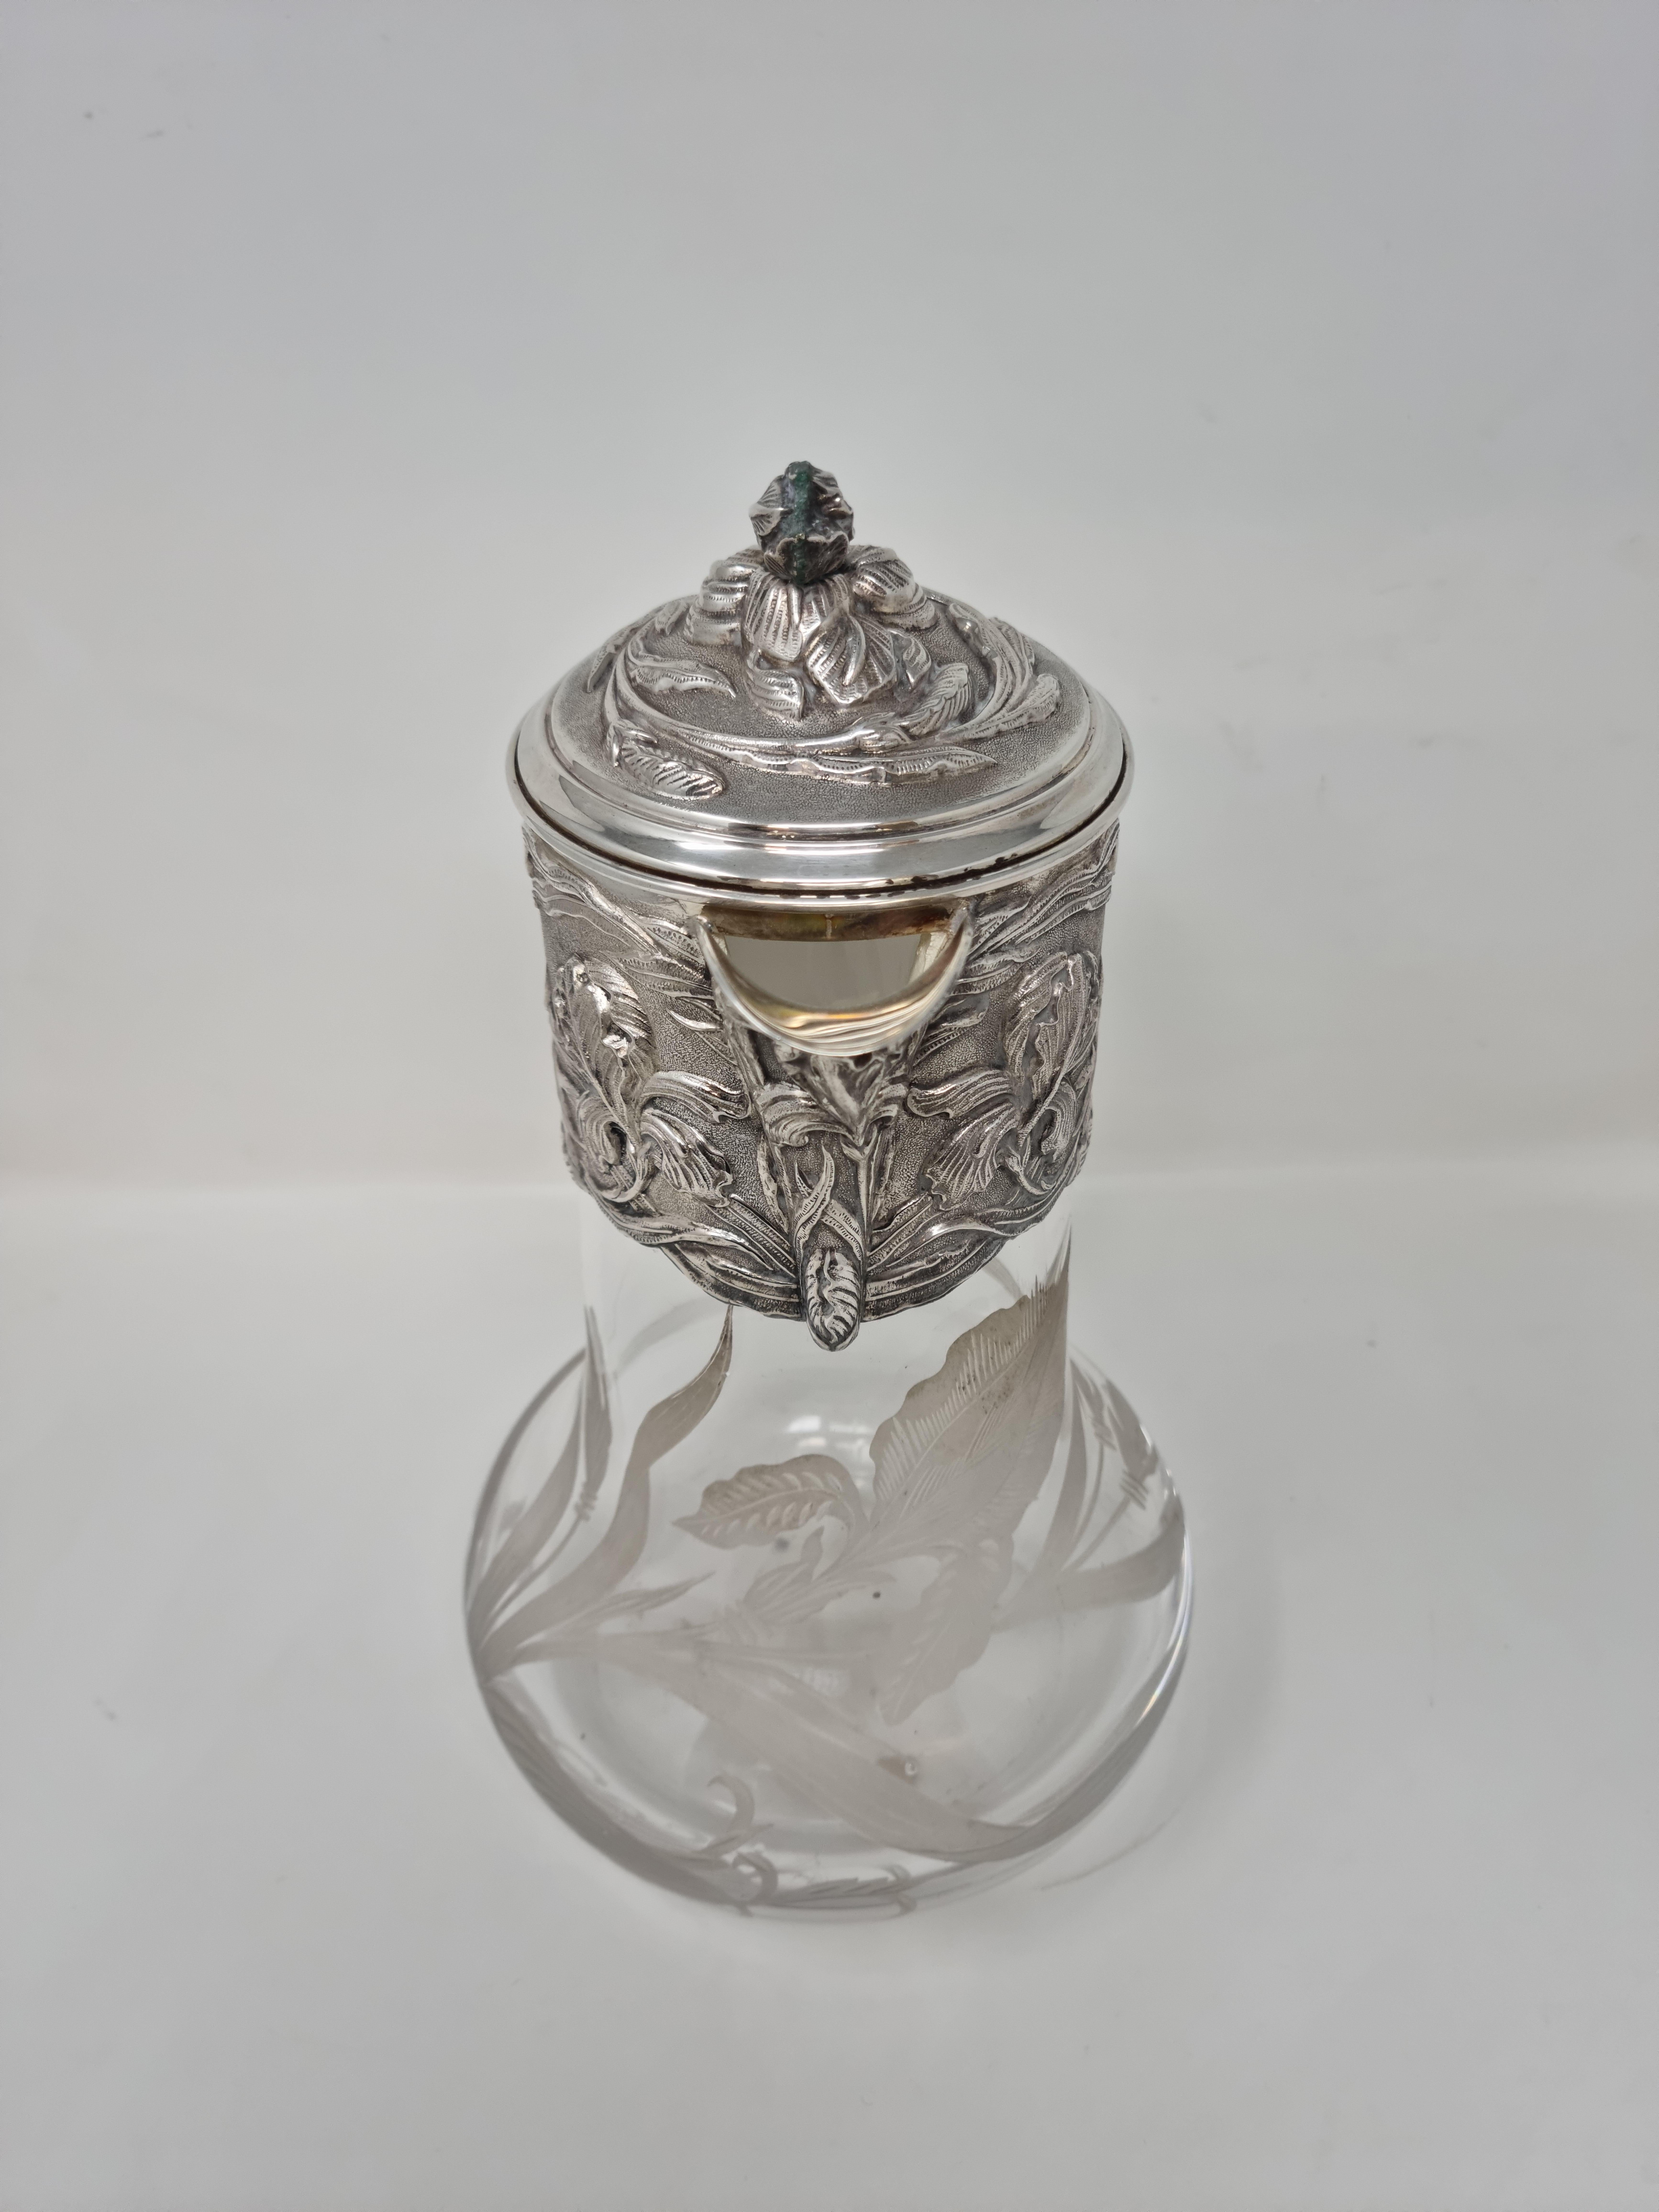 1909 Silver and Acid-Etched Crystal Claret Jug 'Wine Jug' In Excellent Condition For Sale In Reggio Emilia, IT